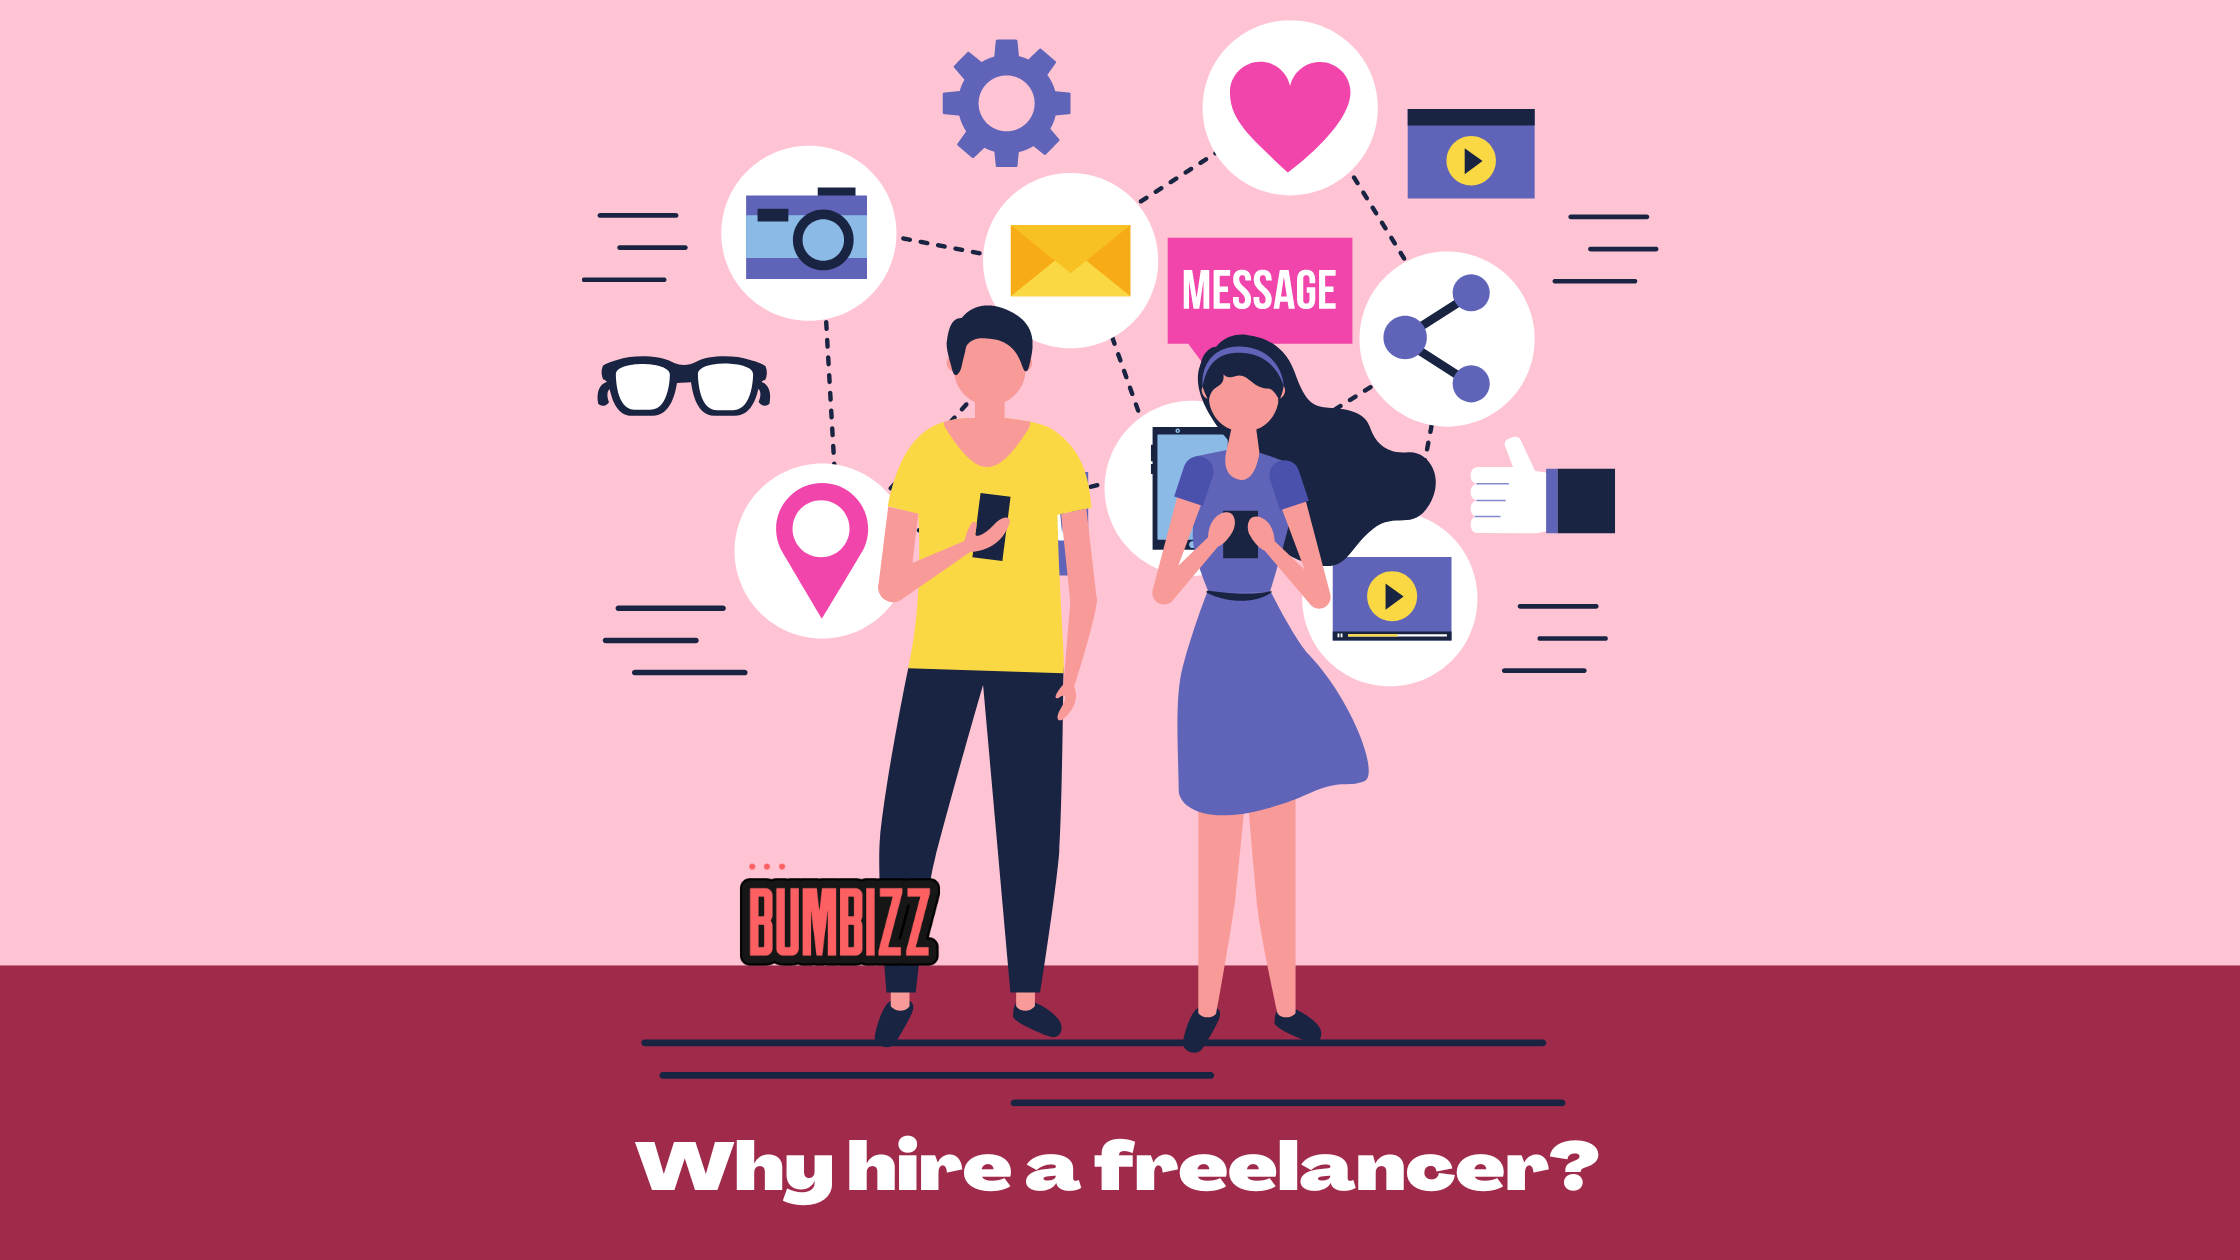 Why hire a freelancer?